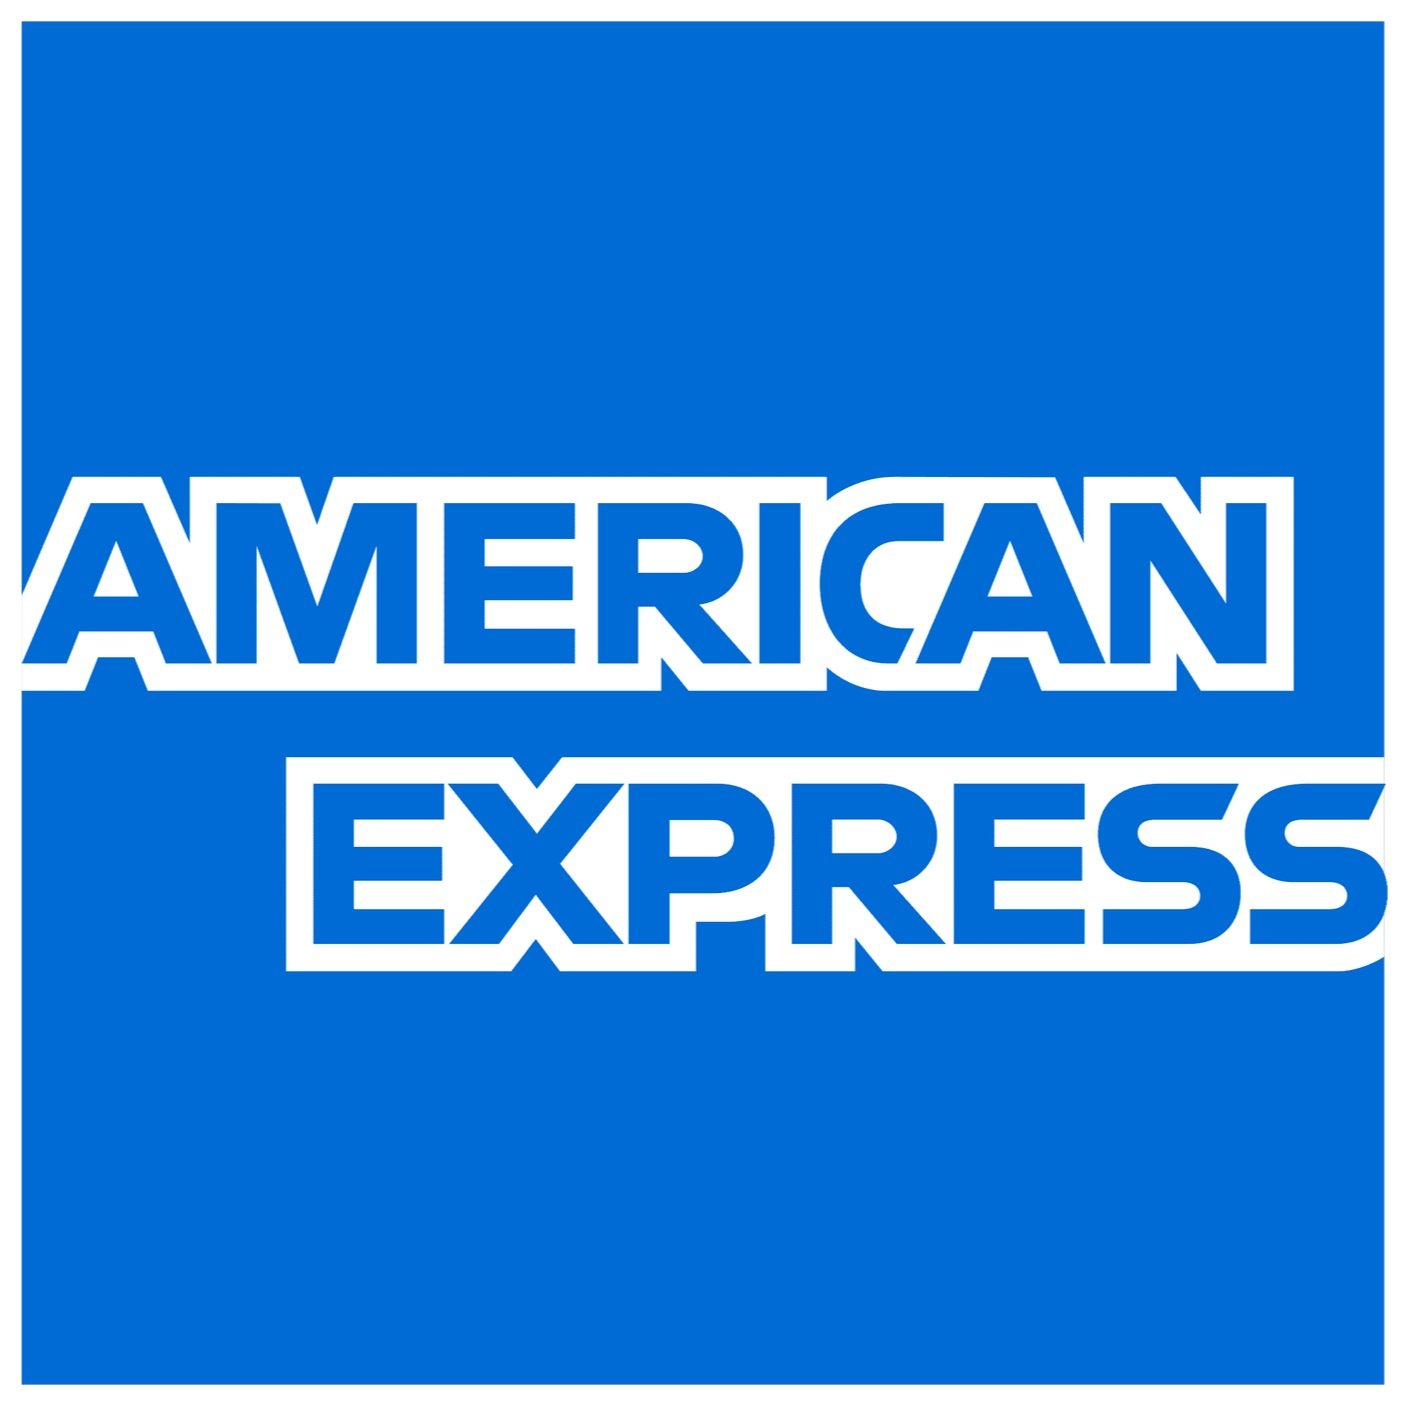 American-Express-logo.jpg